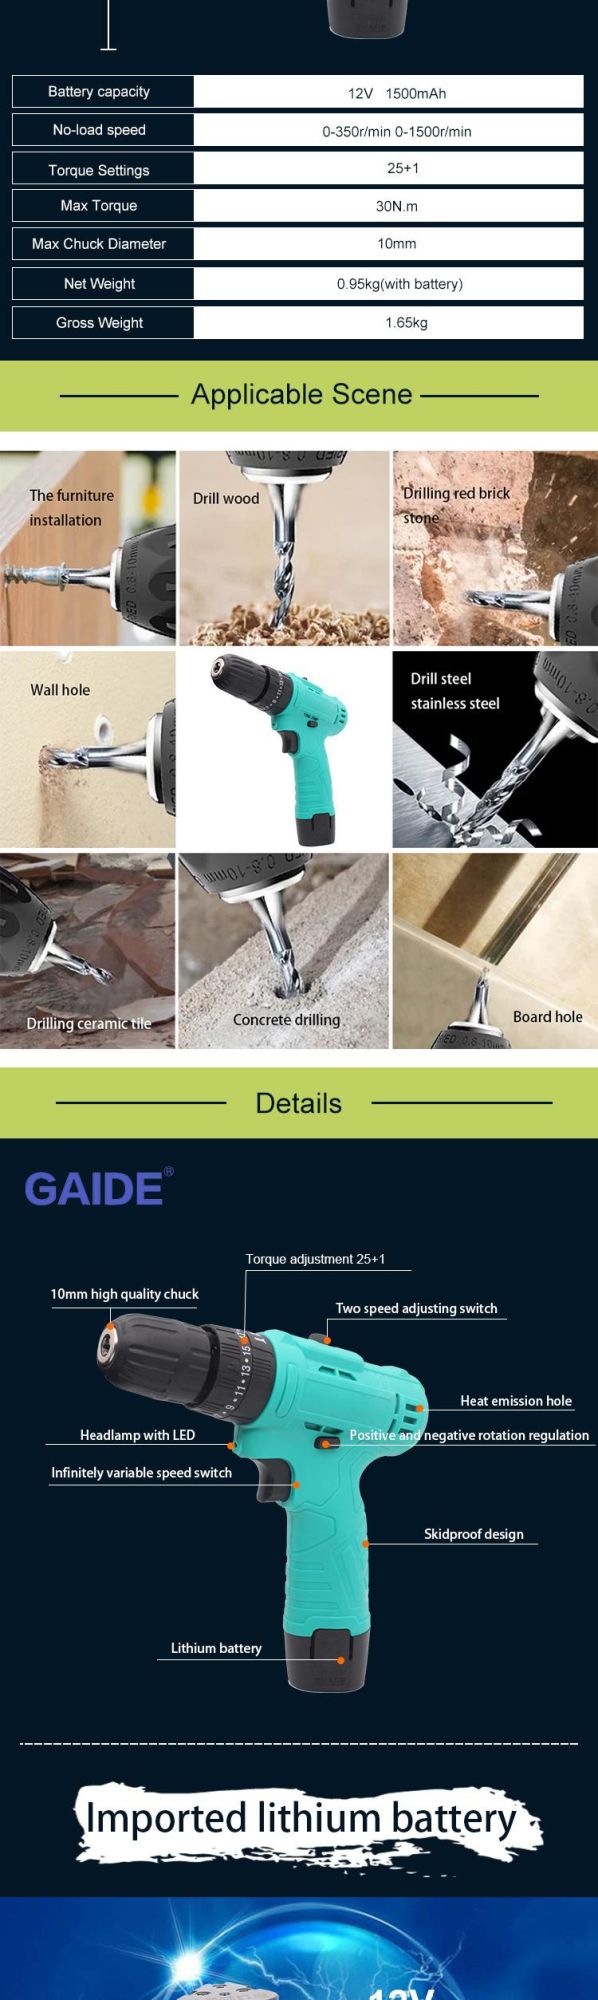 Gaide Cordless Drill Lithium Impact Drill Multi Tools Attachment